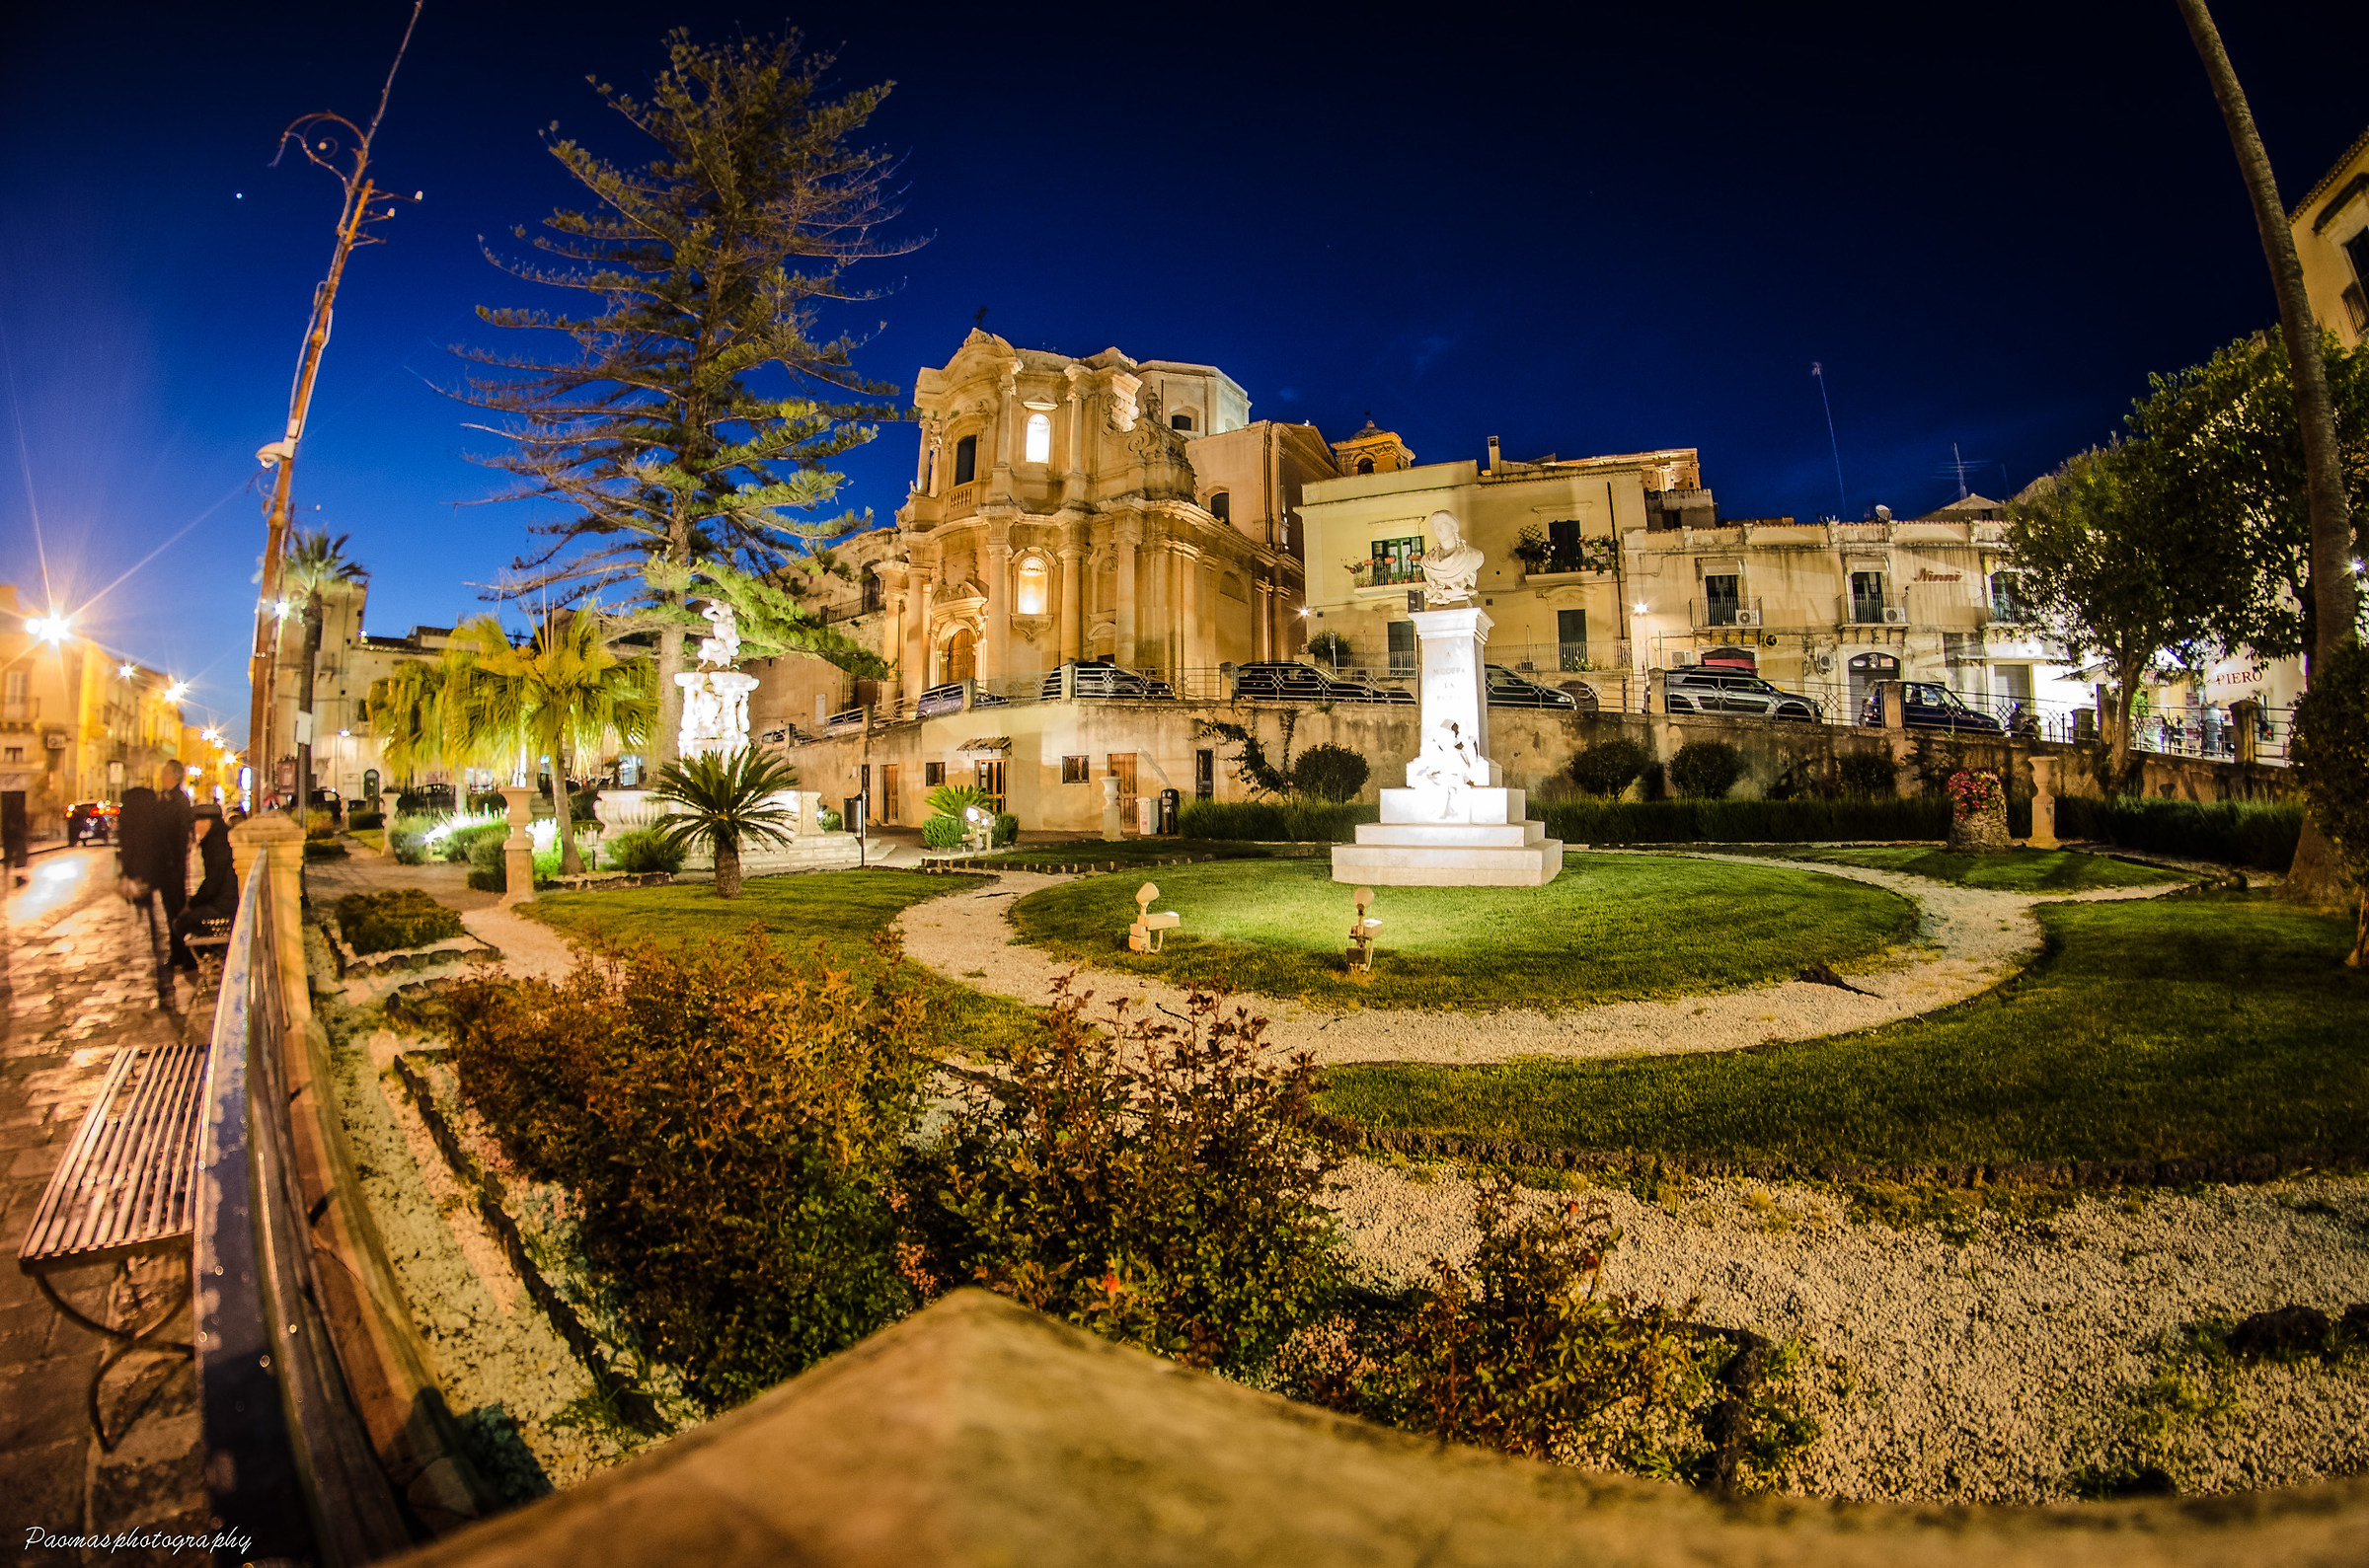 Sicily - Noto by night...